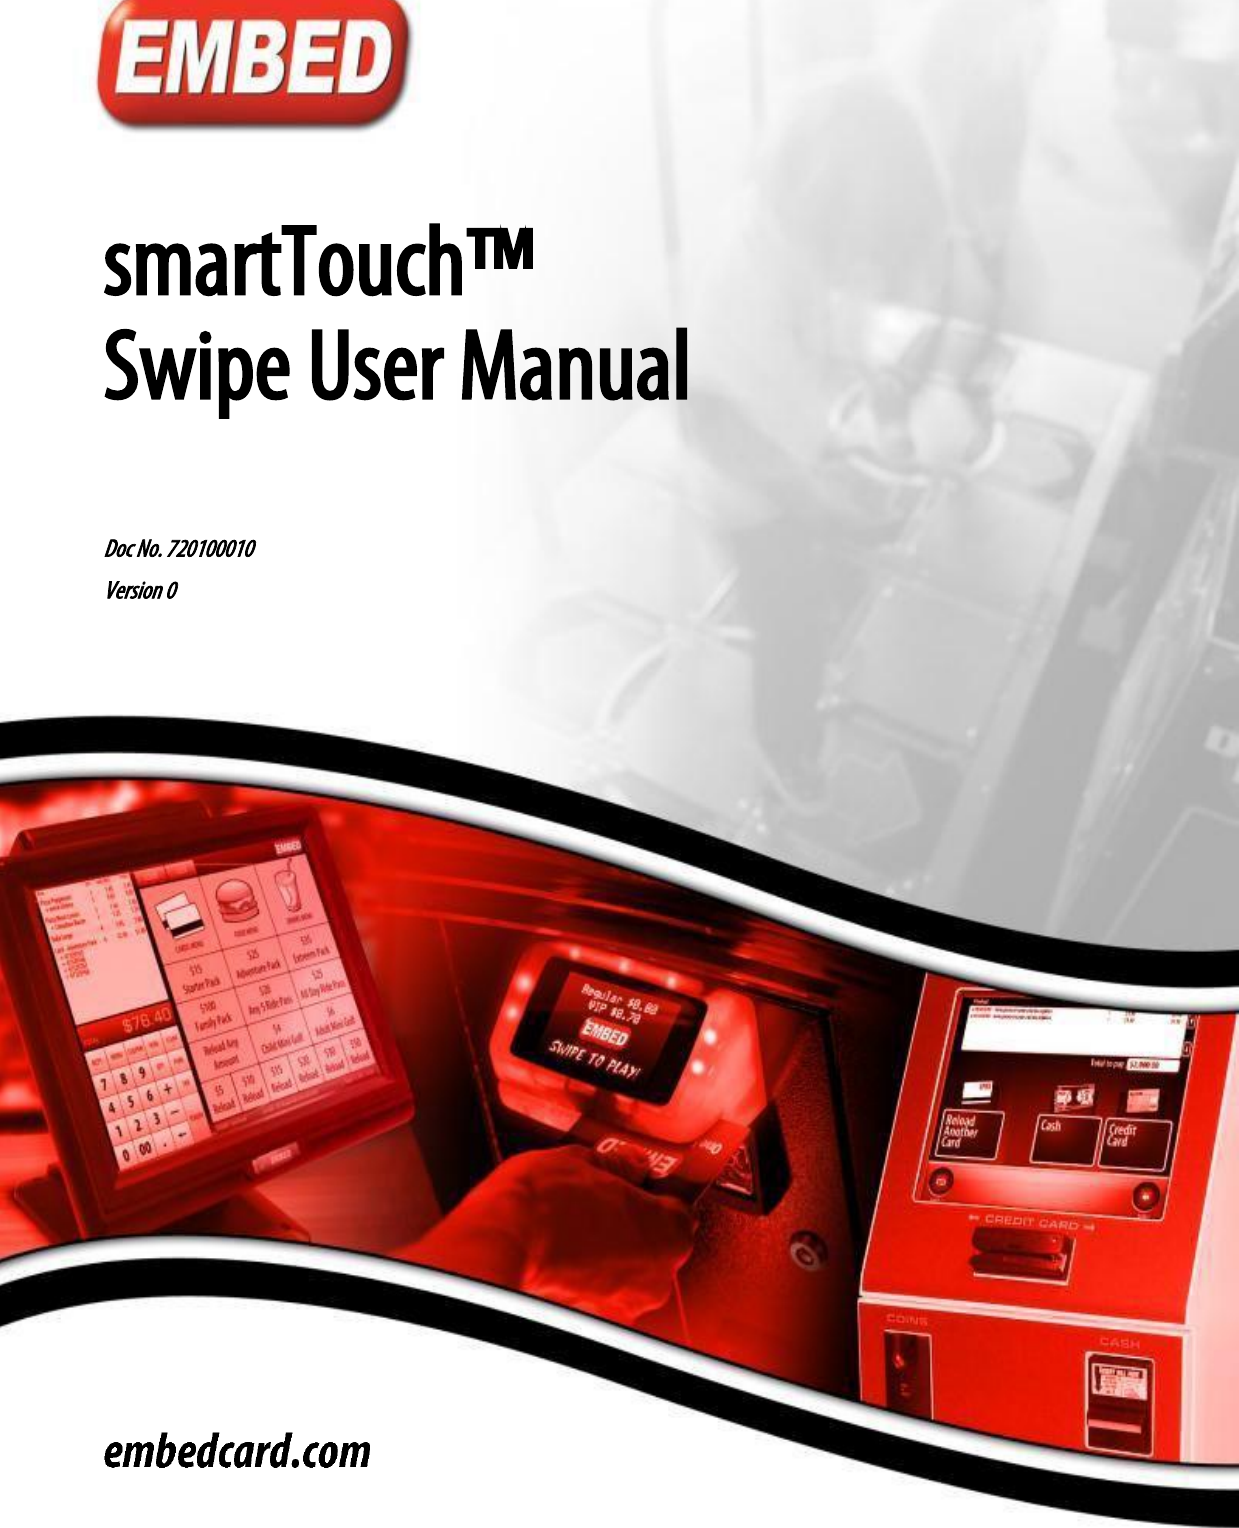               smartTouch™ Swipe User Manual   Doc No. 720100010 Version 0  